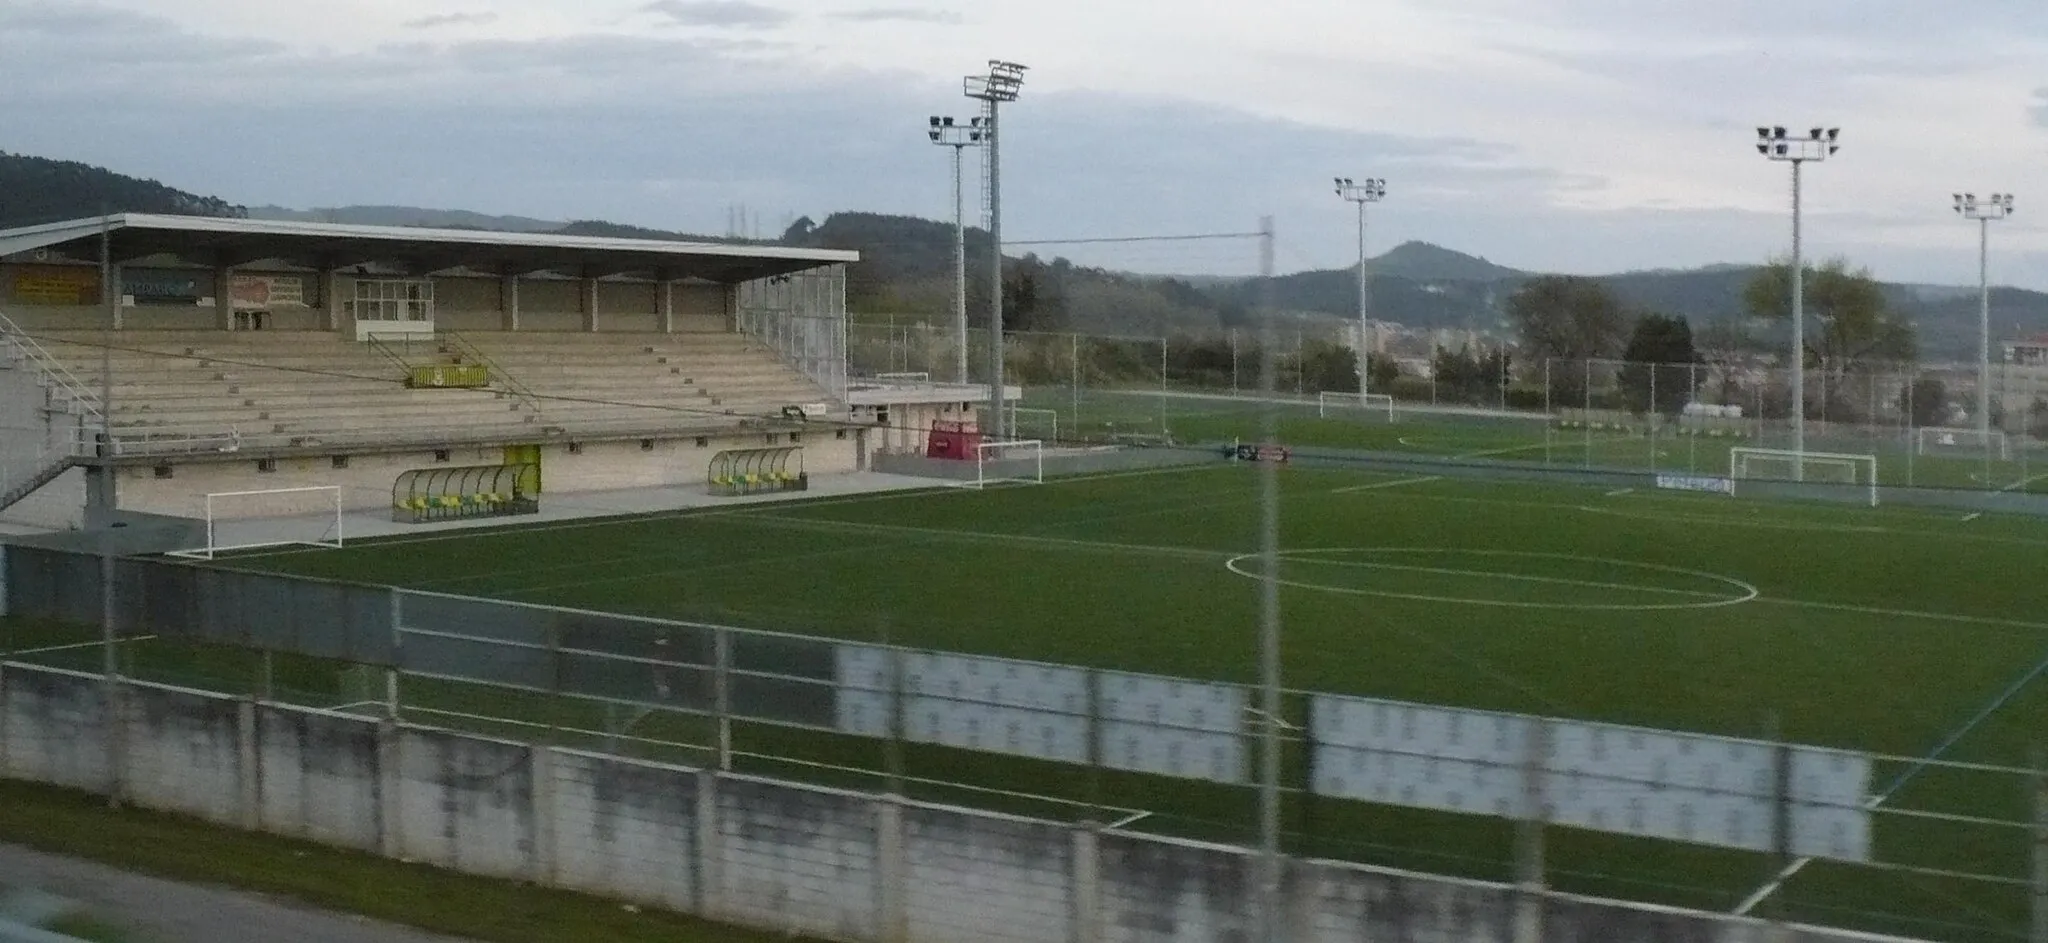 Photo showing: Santa Ana football ground in Tanos, Torlavega (Cantabria), home to Club Deportivo Tropezón